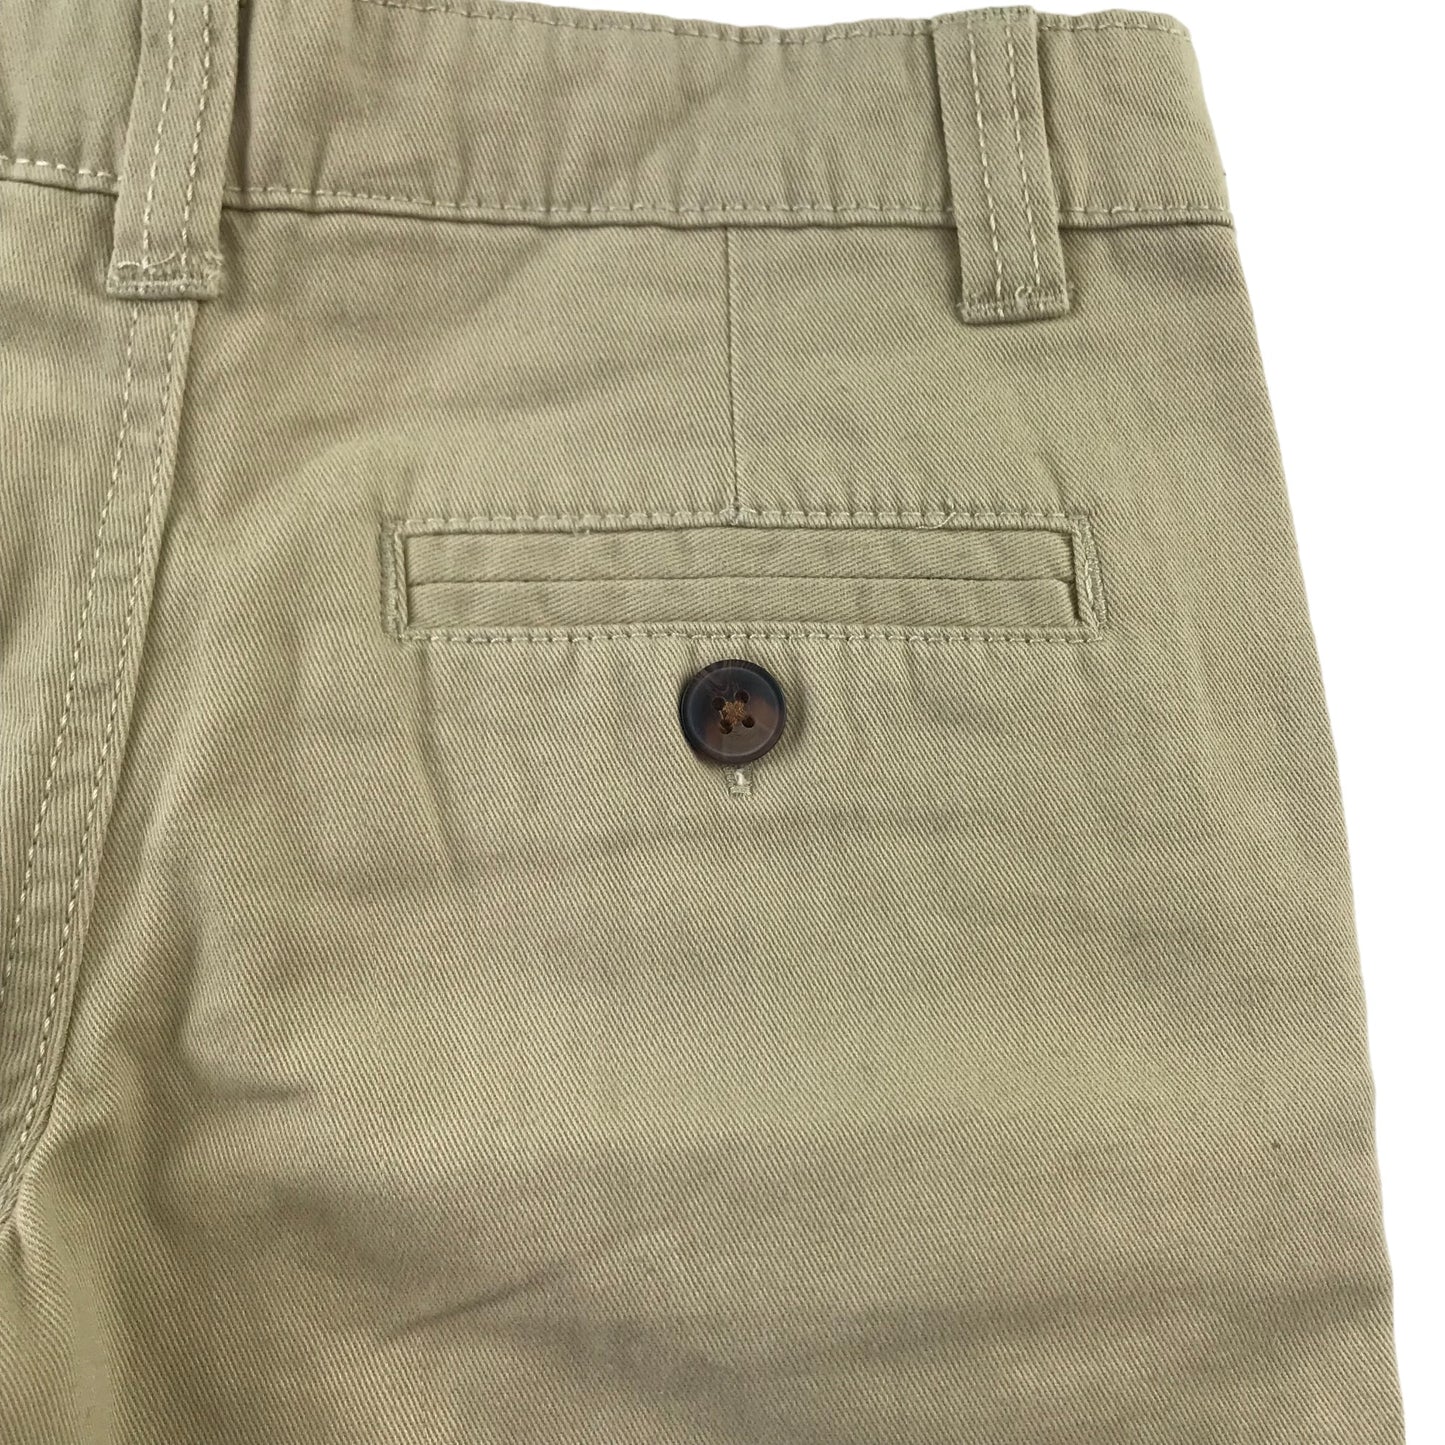 Primark shorts 5-6 years beige plain chino style cotton